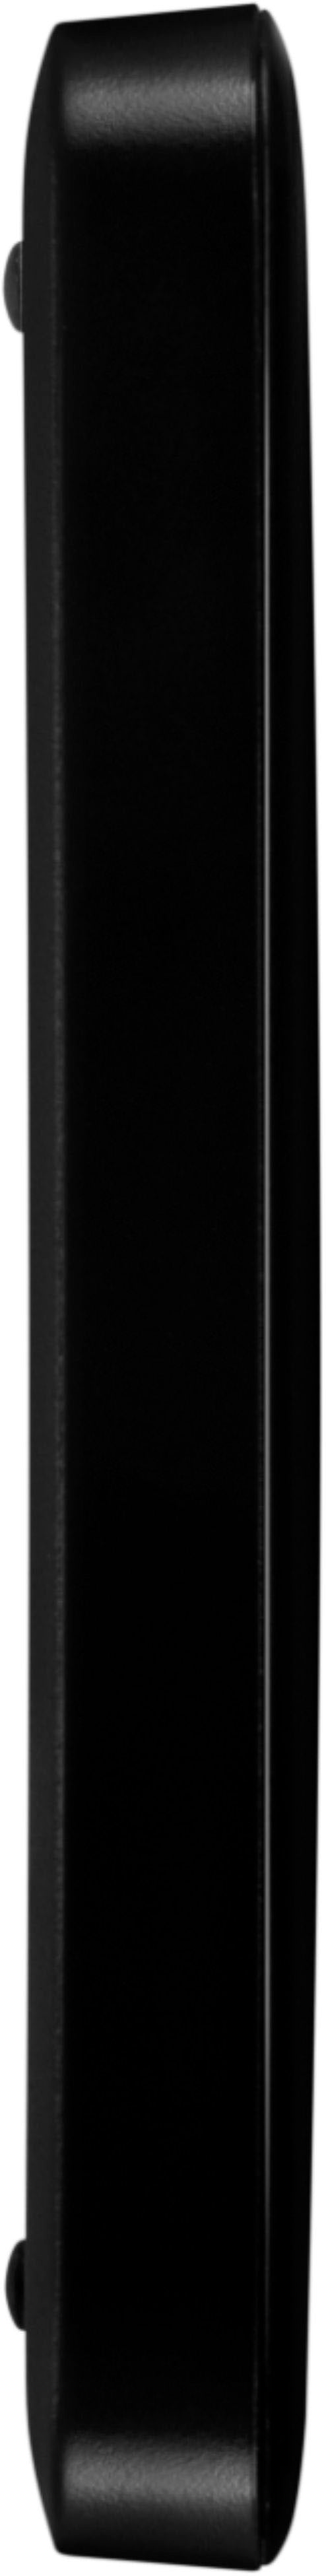 WD - Easystore 1TB External USB 3.0 Portable Hard Drive_9